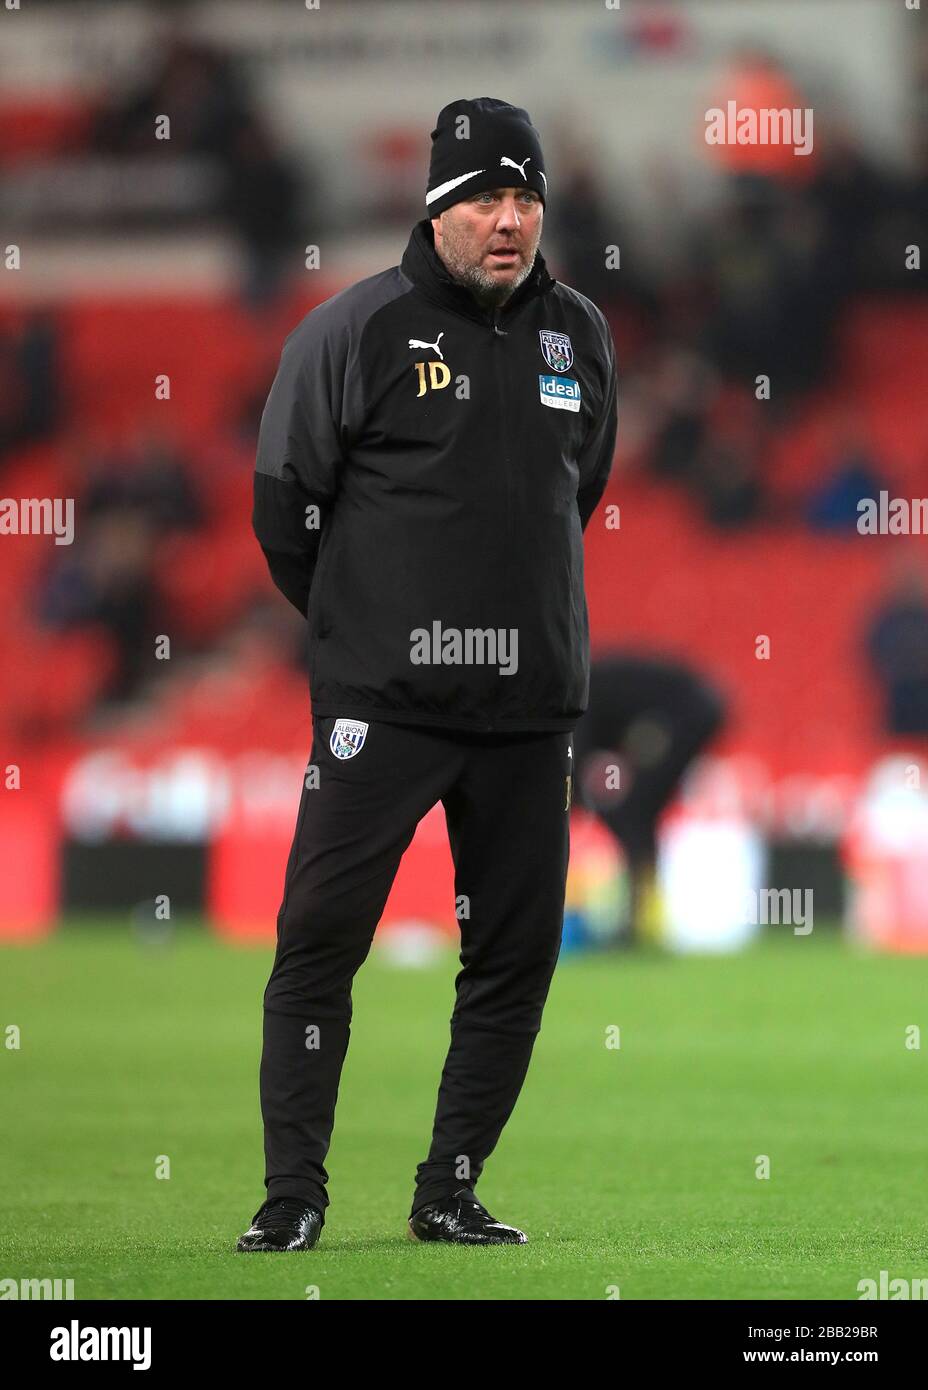 West Bromwich Albion Trainer Julian Dicks Stockfotografie - Alamy